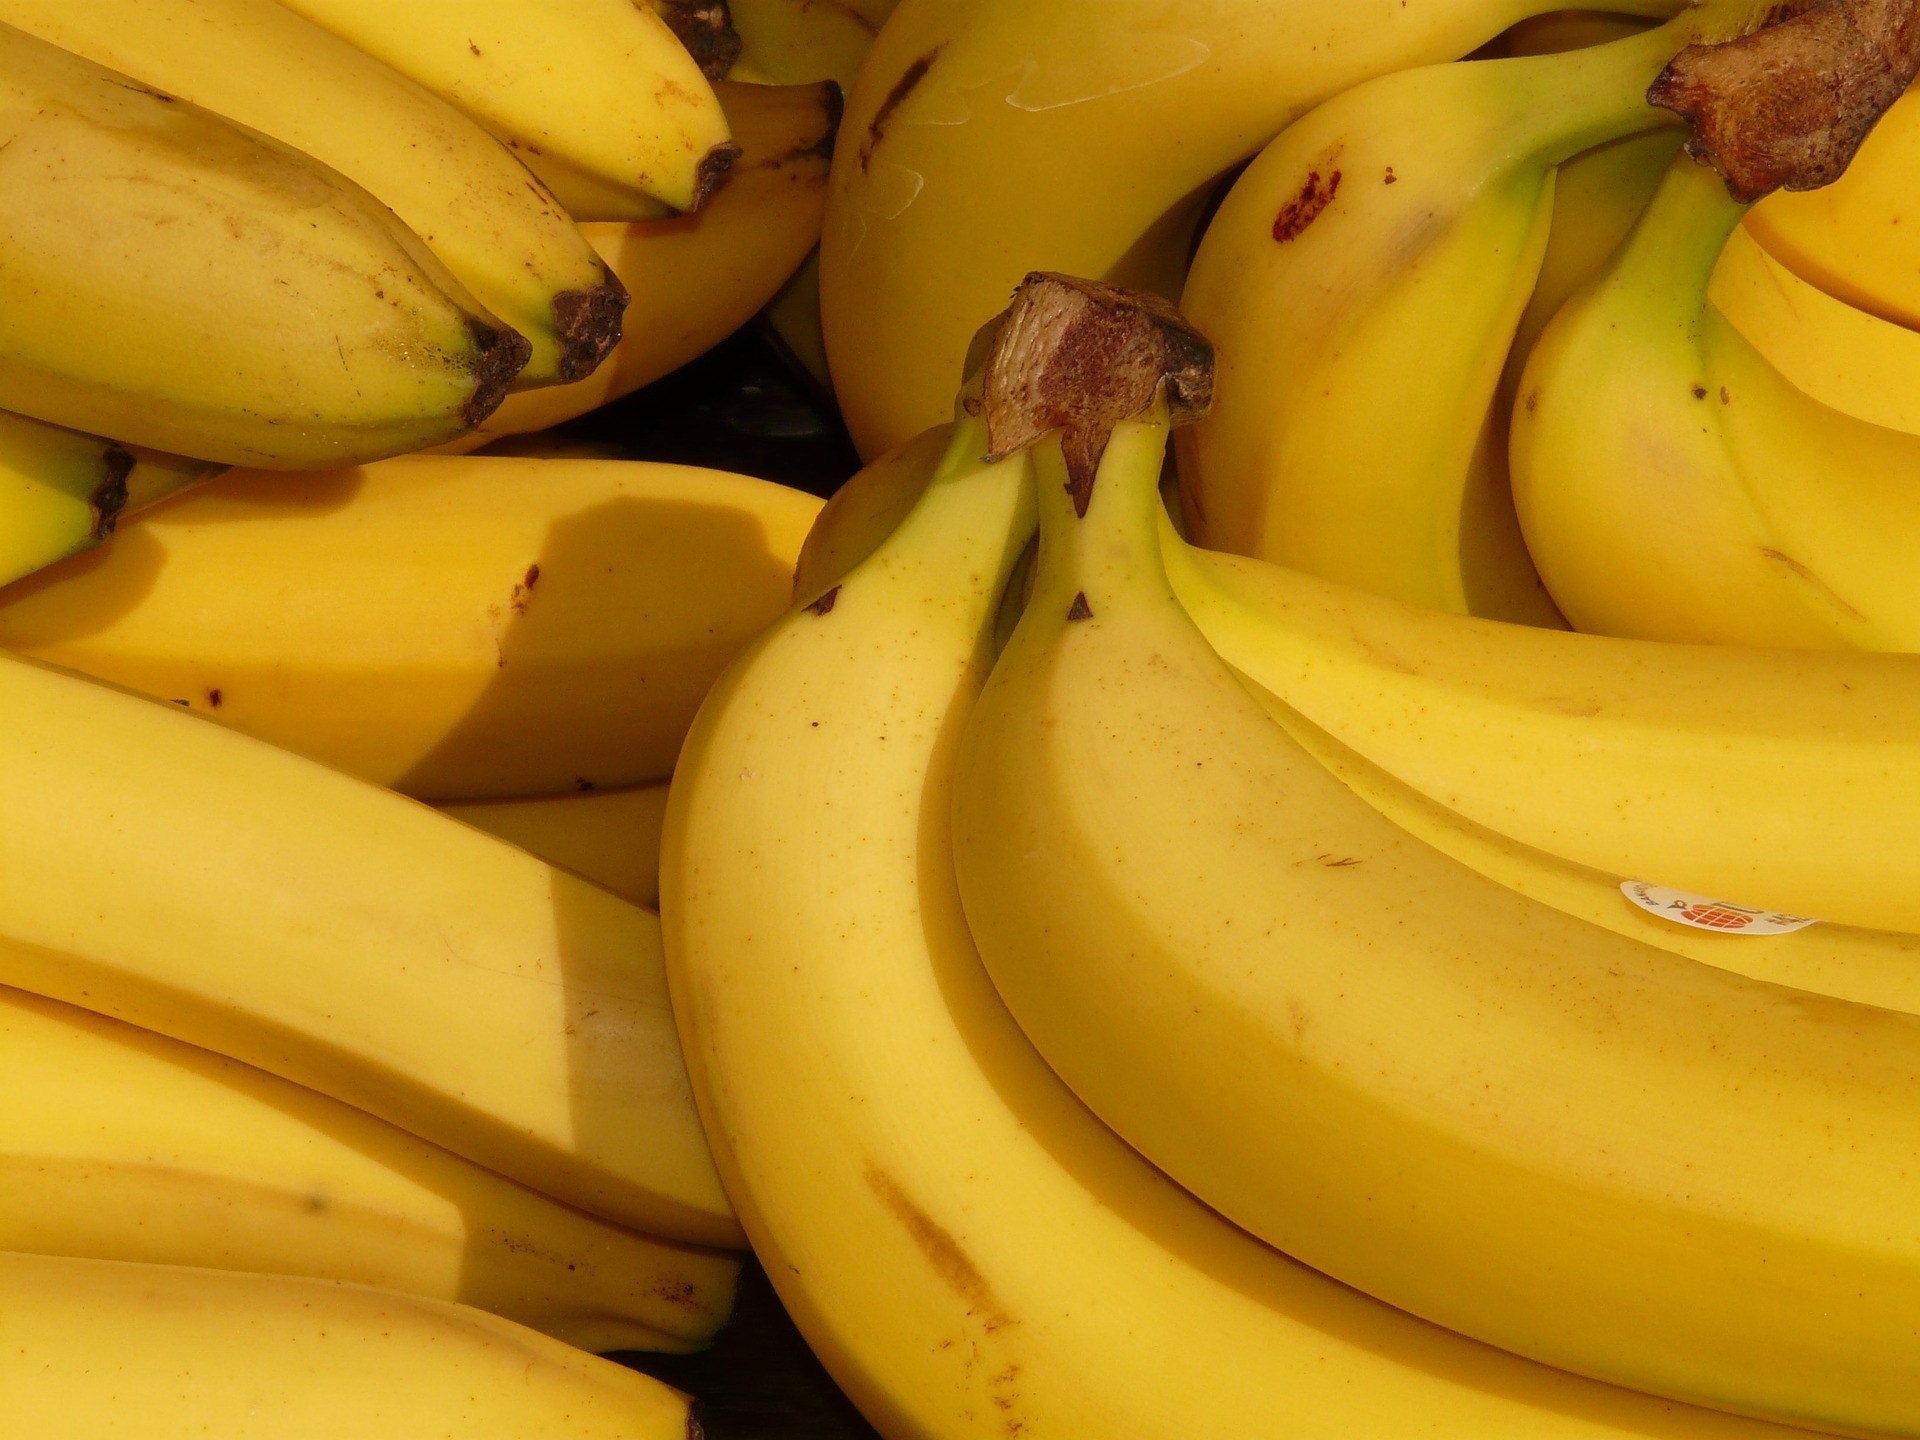 Honduras realiza “histórica” compra de banano de Costa Rica para suplir mercado local